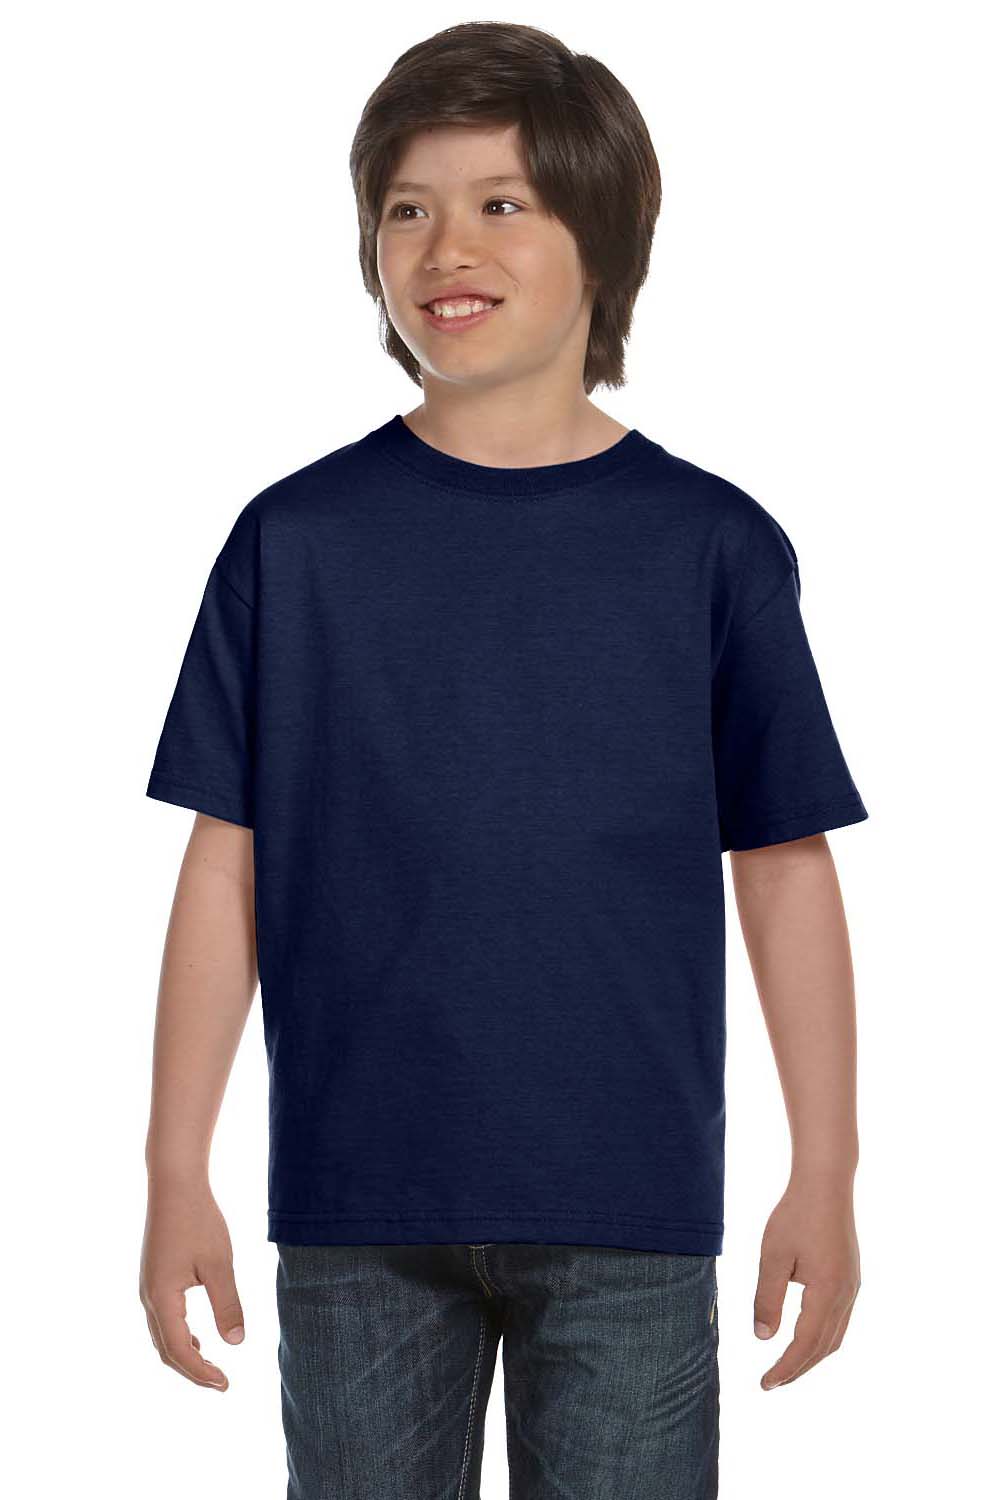 Hanes 5480 Youth ComfortSoft Short Sleeve Crewneck T-Shirt Navy Blue Front